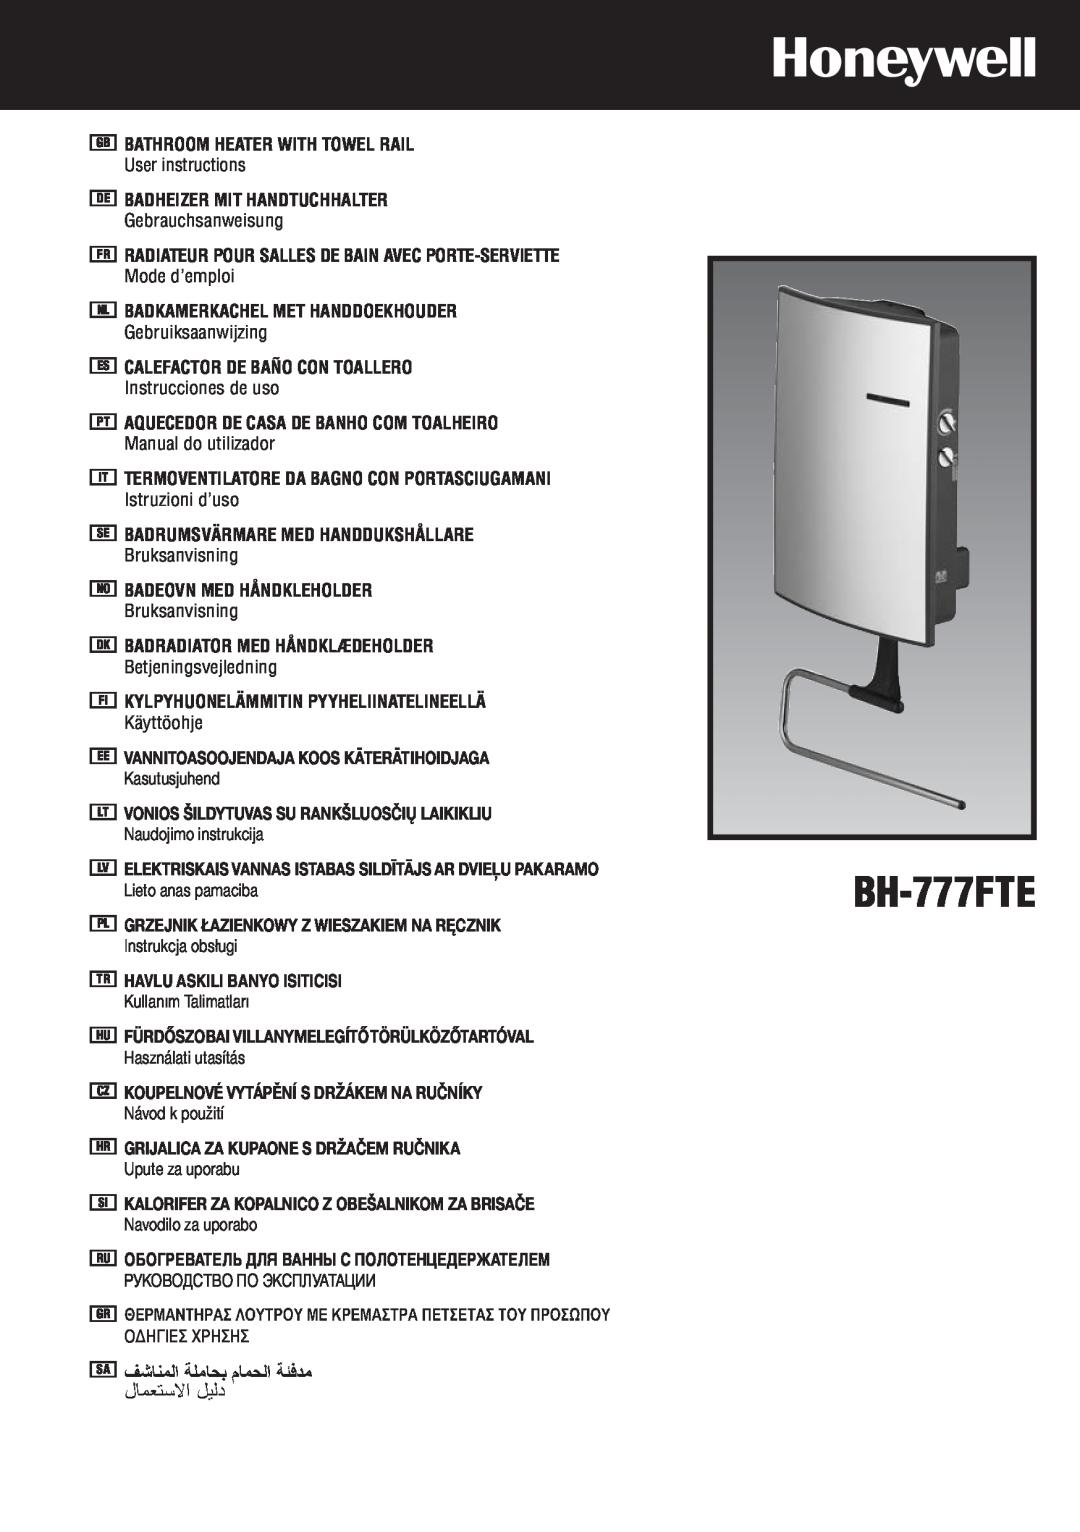 Honeywell BH-777FTE manual do utilizador Bathroom Heater With Towel Rail, Badheizer Mit Handtuchhalter 